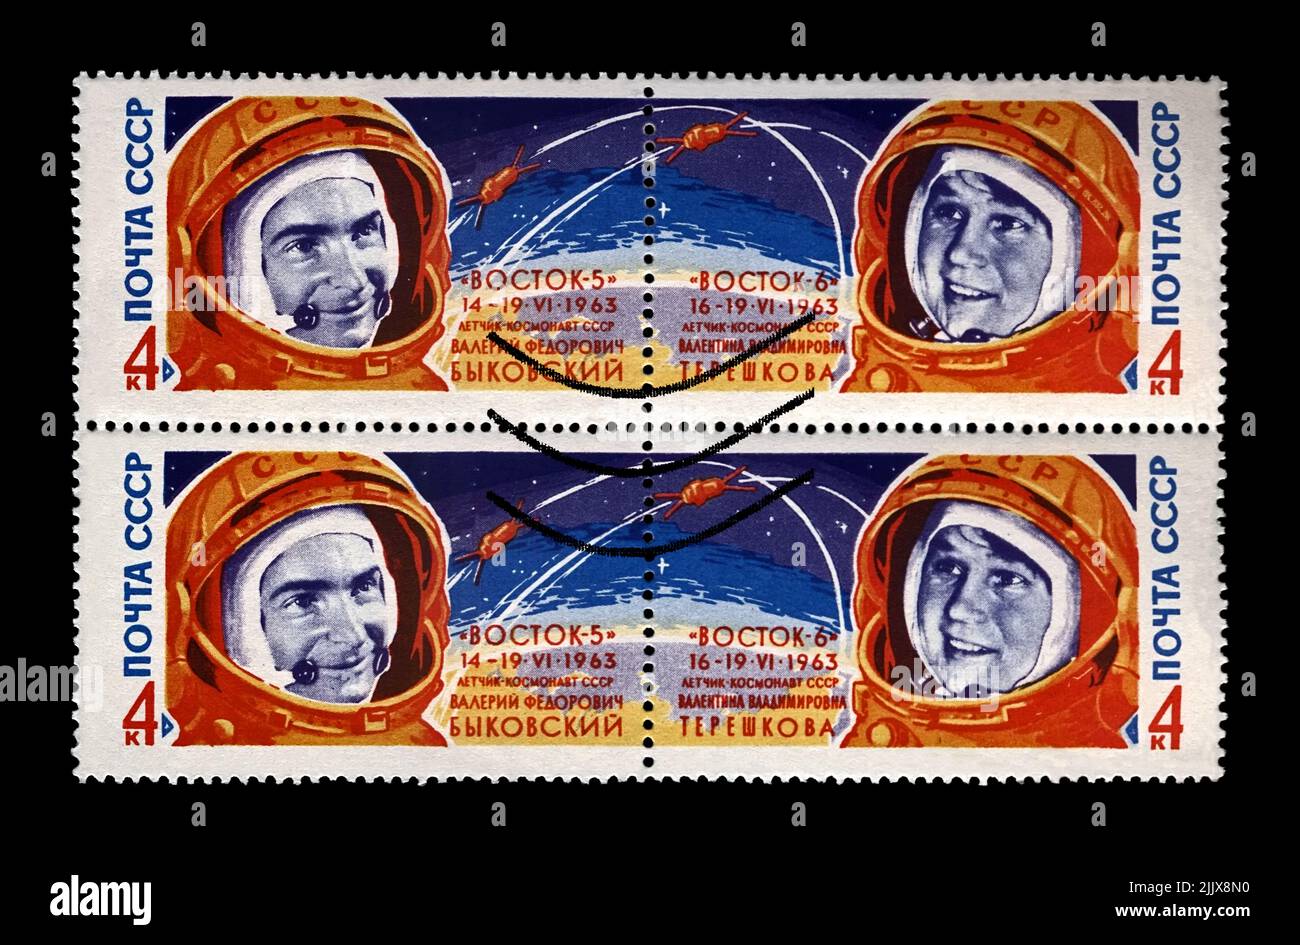 Valentina Tereshkova e Valery Bykovsky, astronauti sovietici, navetta razzo Vostok 5 e 6, circa 1963. Timbro postale annullato stampato in URSS Foto Stock